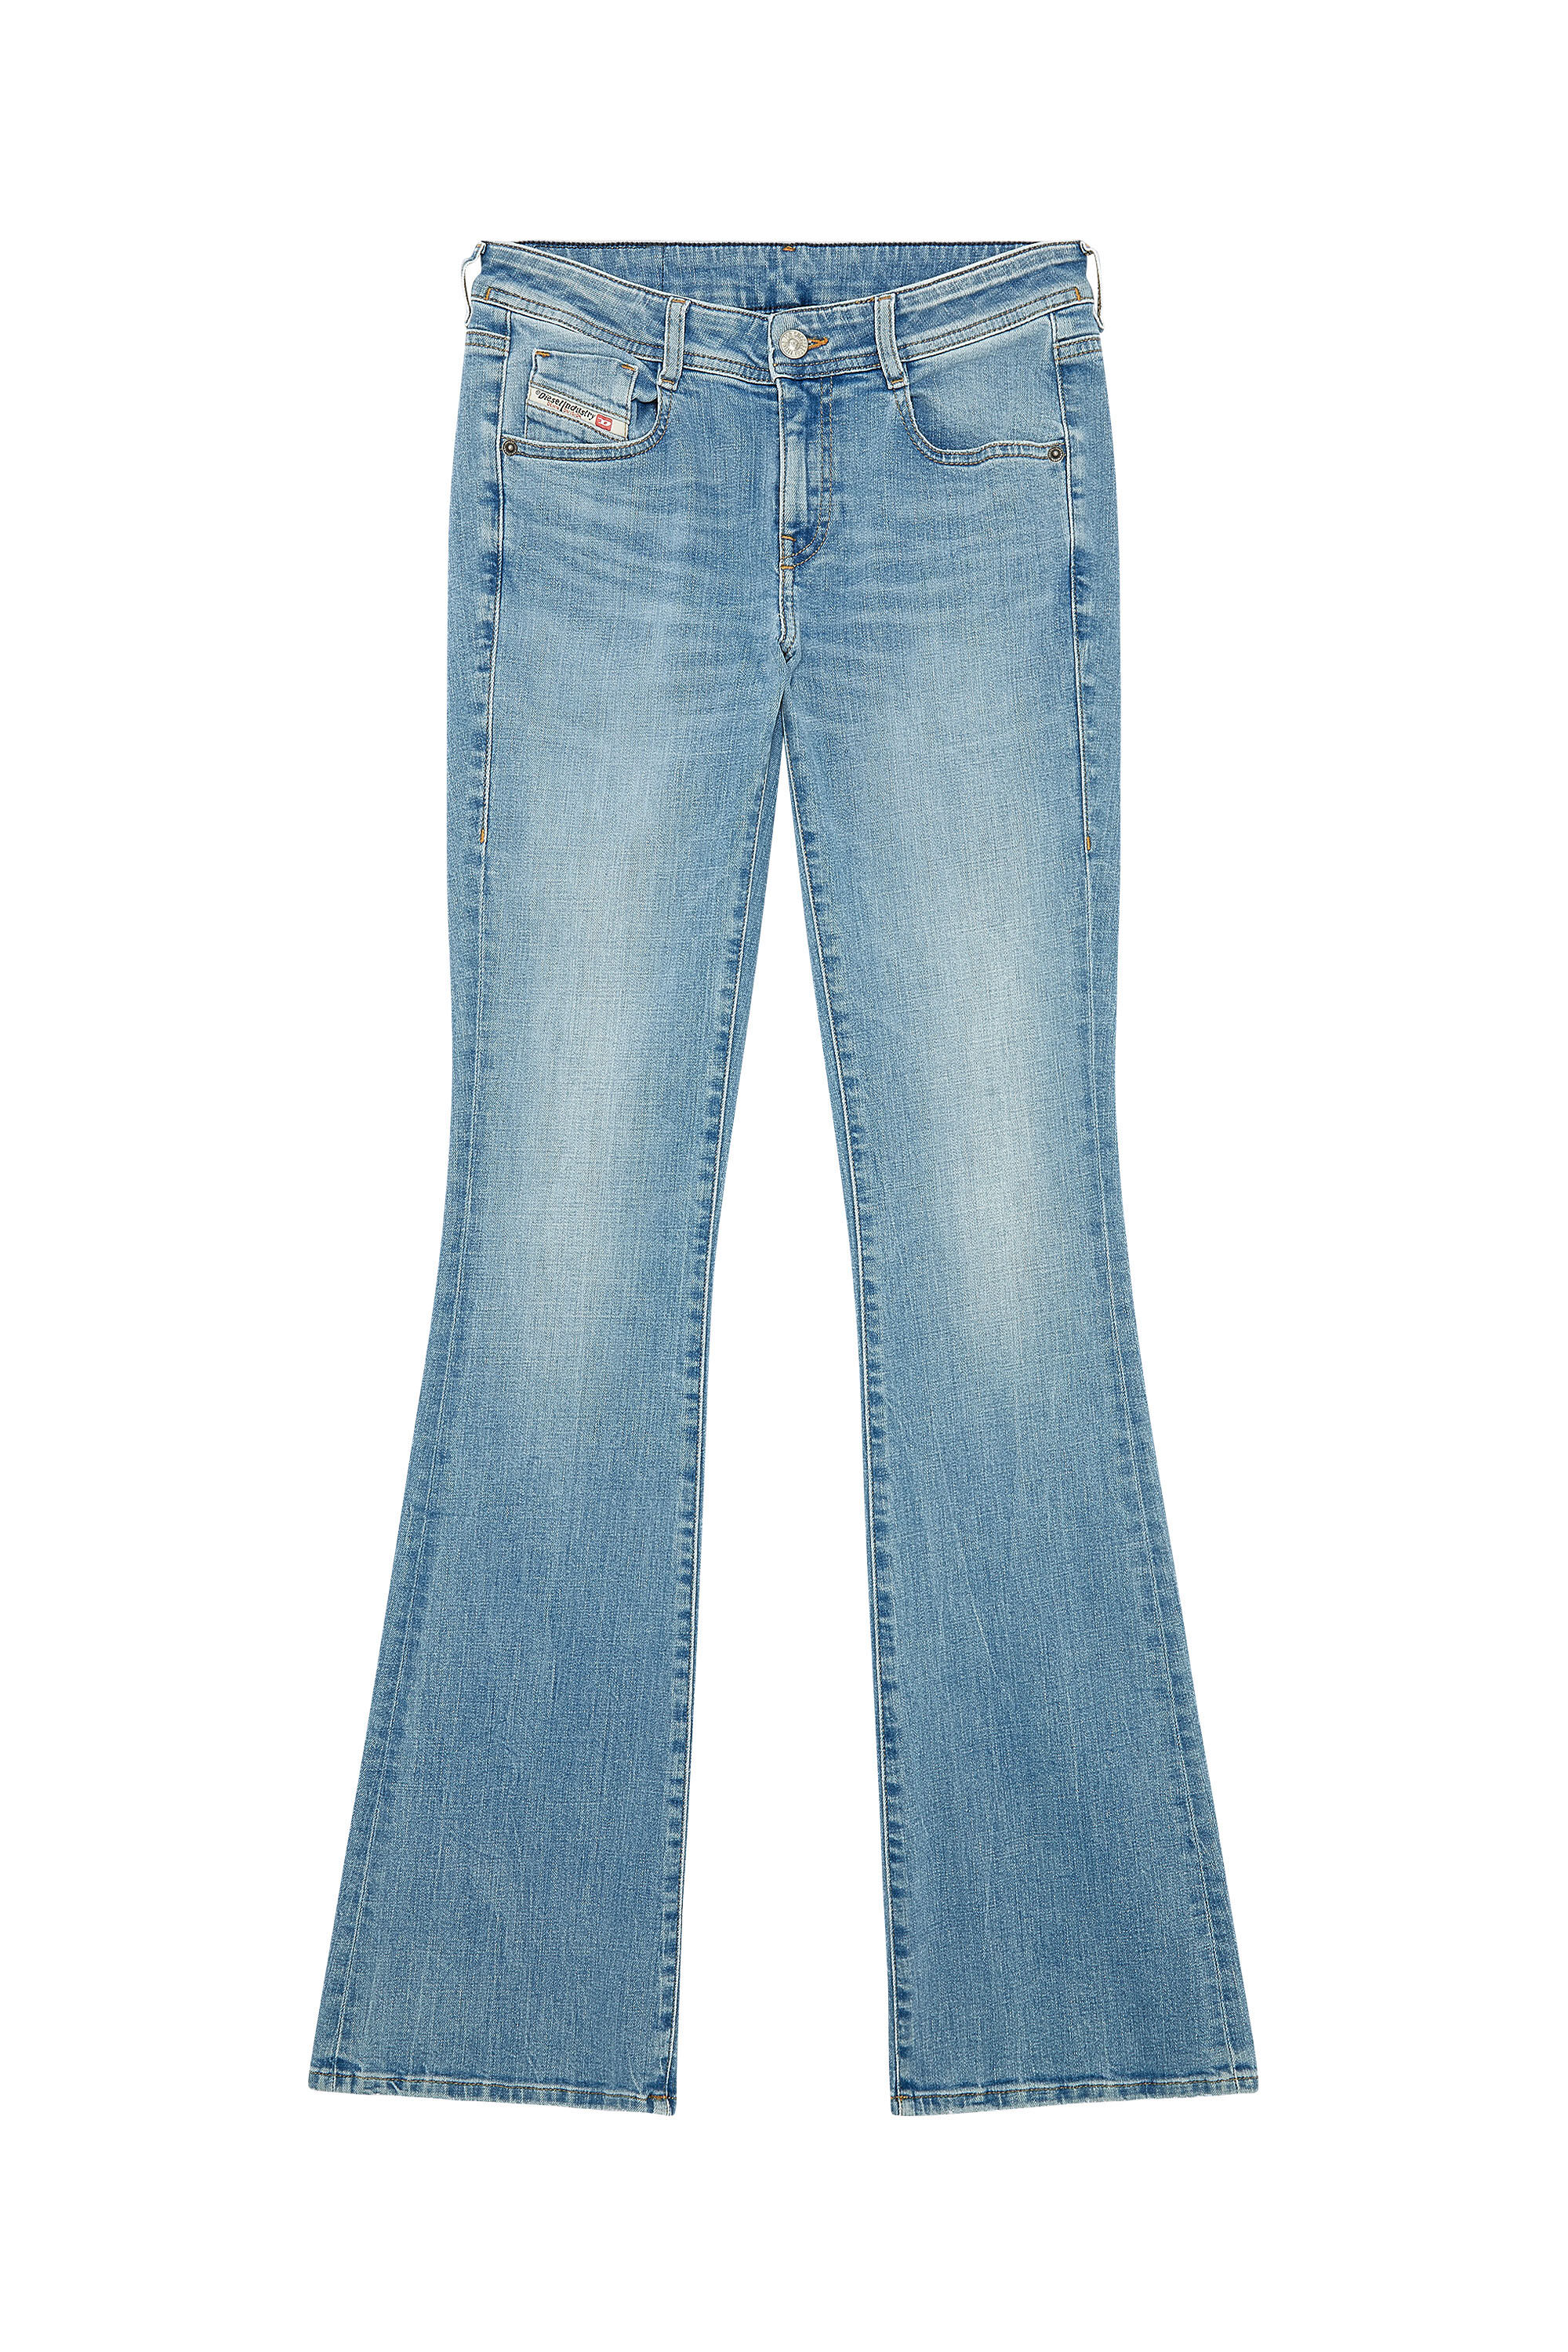 Women's Bootcut and Flare Jeans | Light blue | Diesel 1969 D-Ebbey